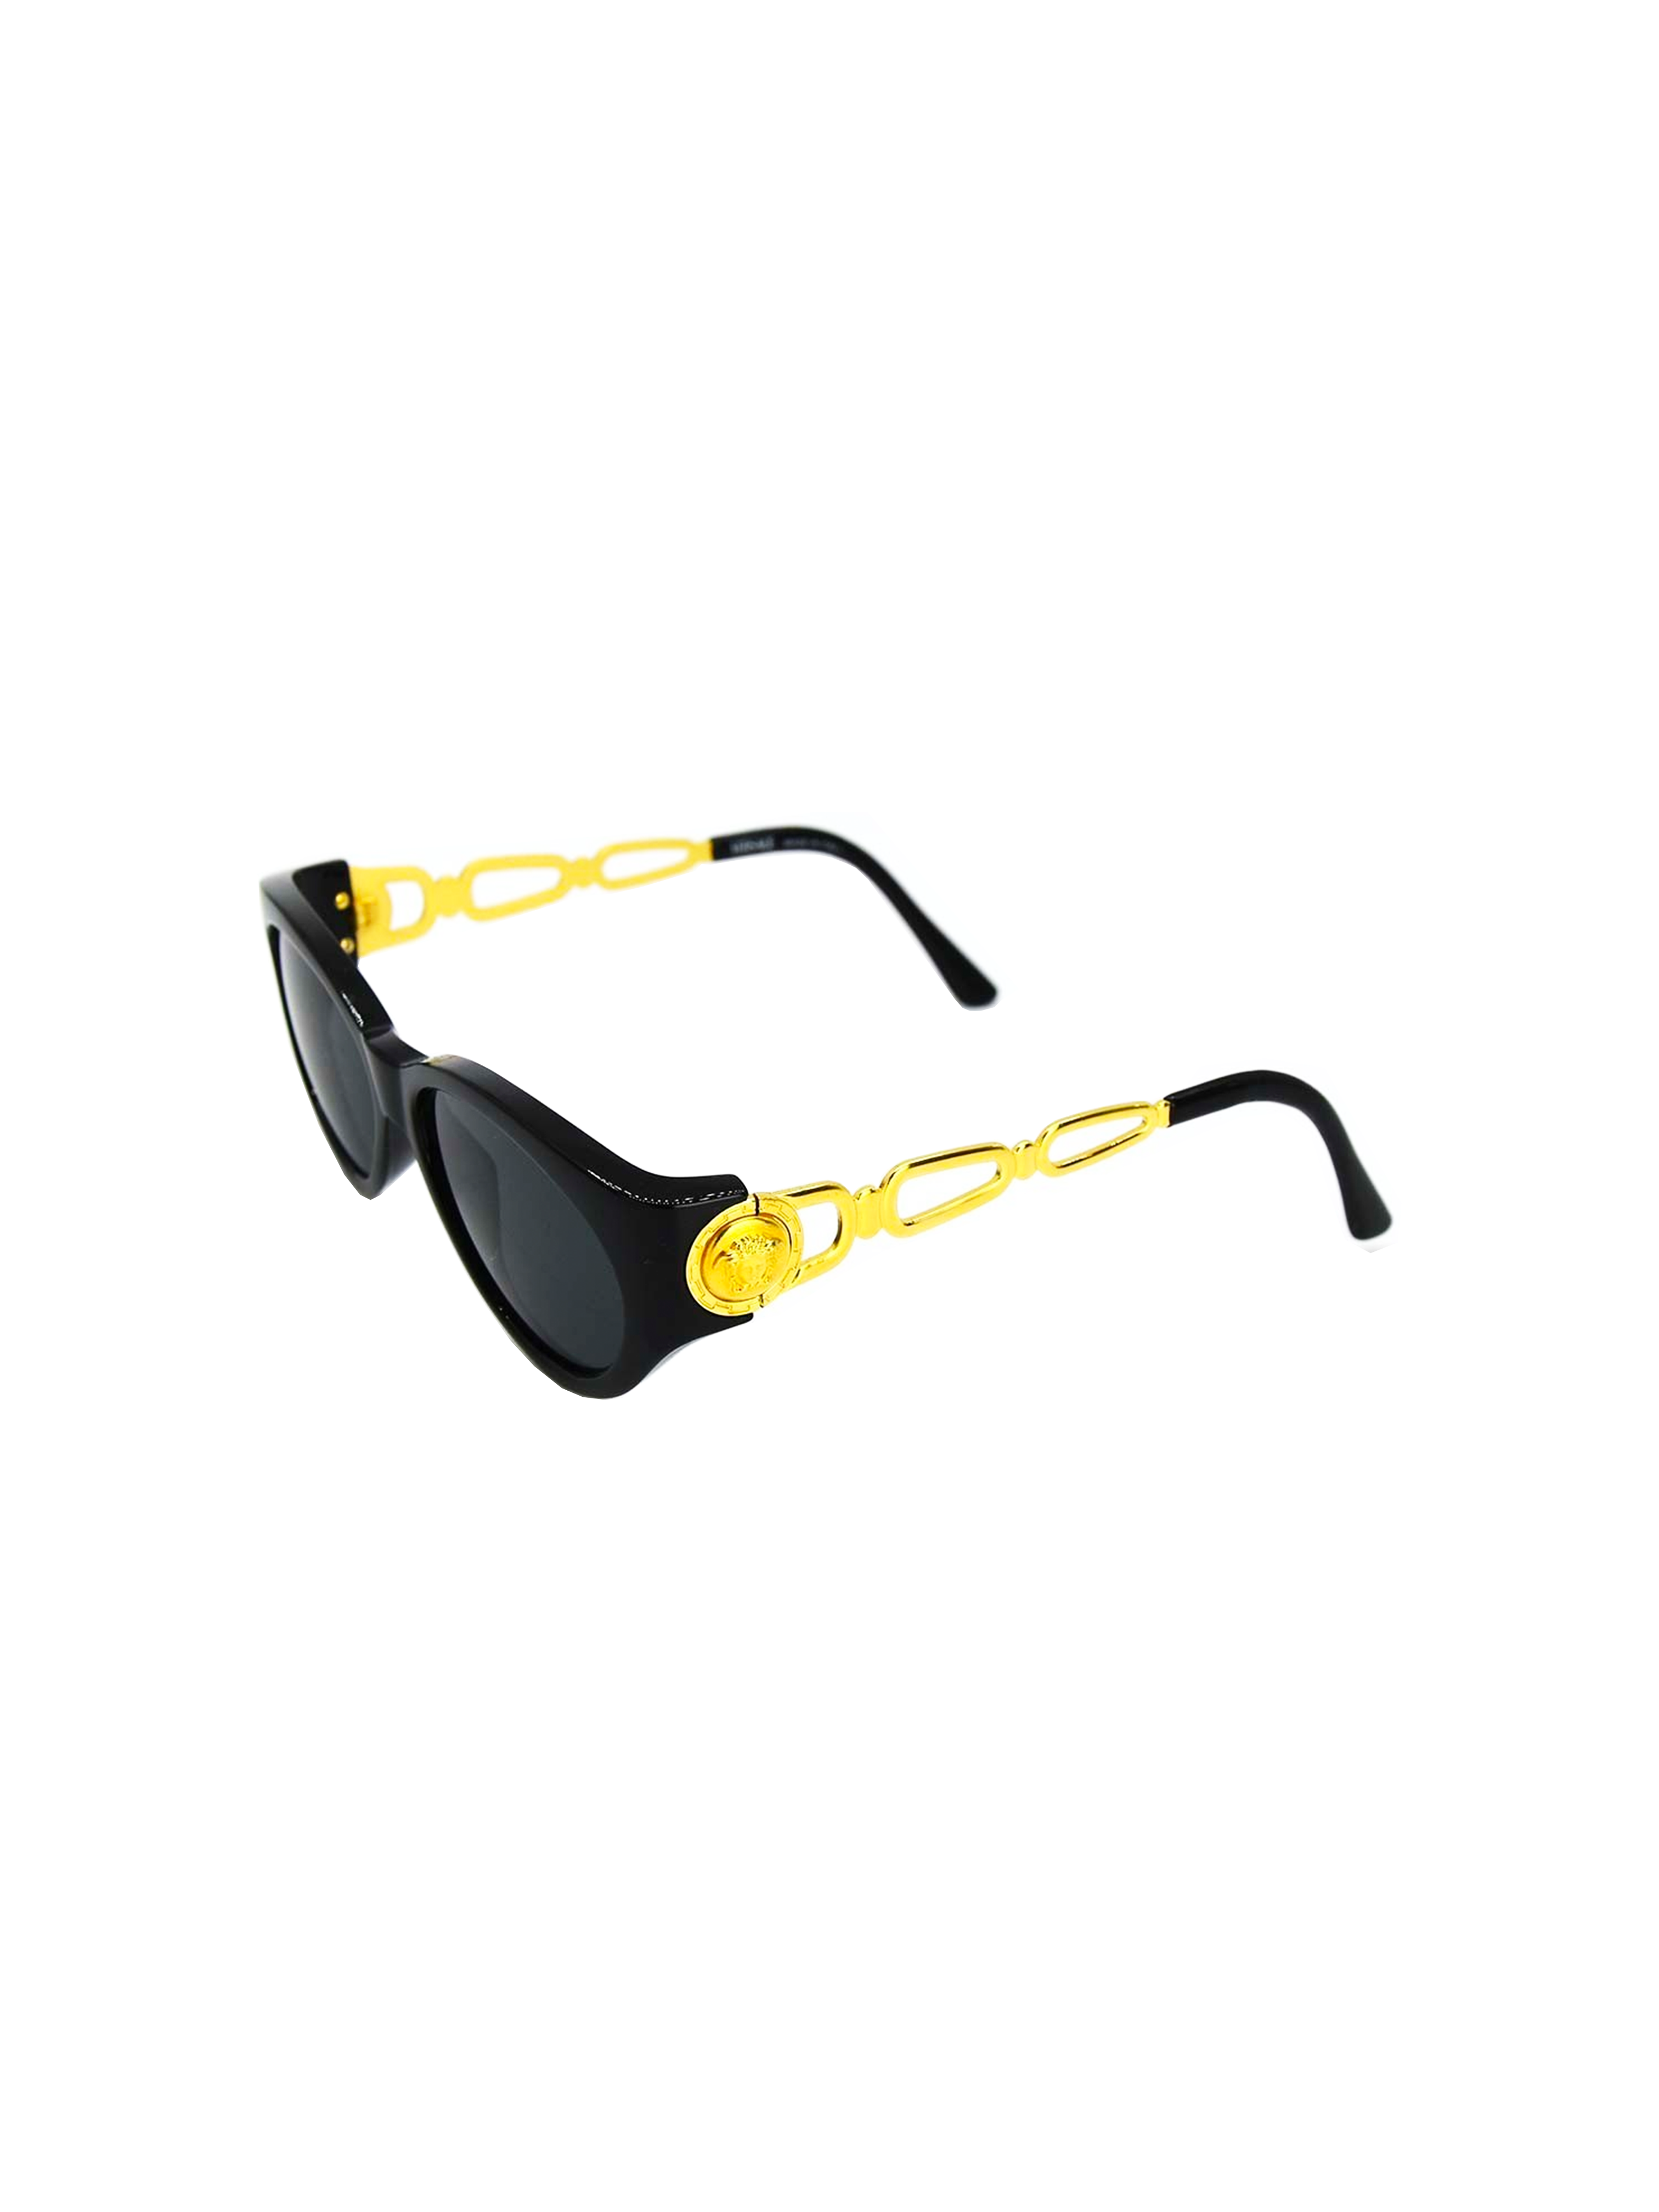 Versace 2000s Rare Gold Chain Link Sunglasses